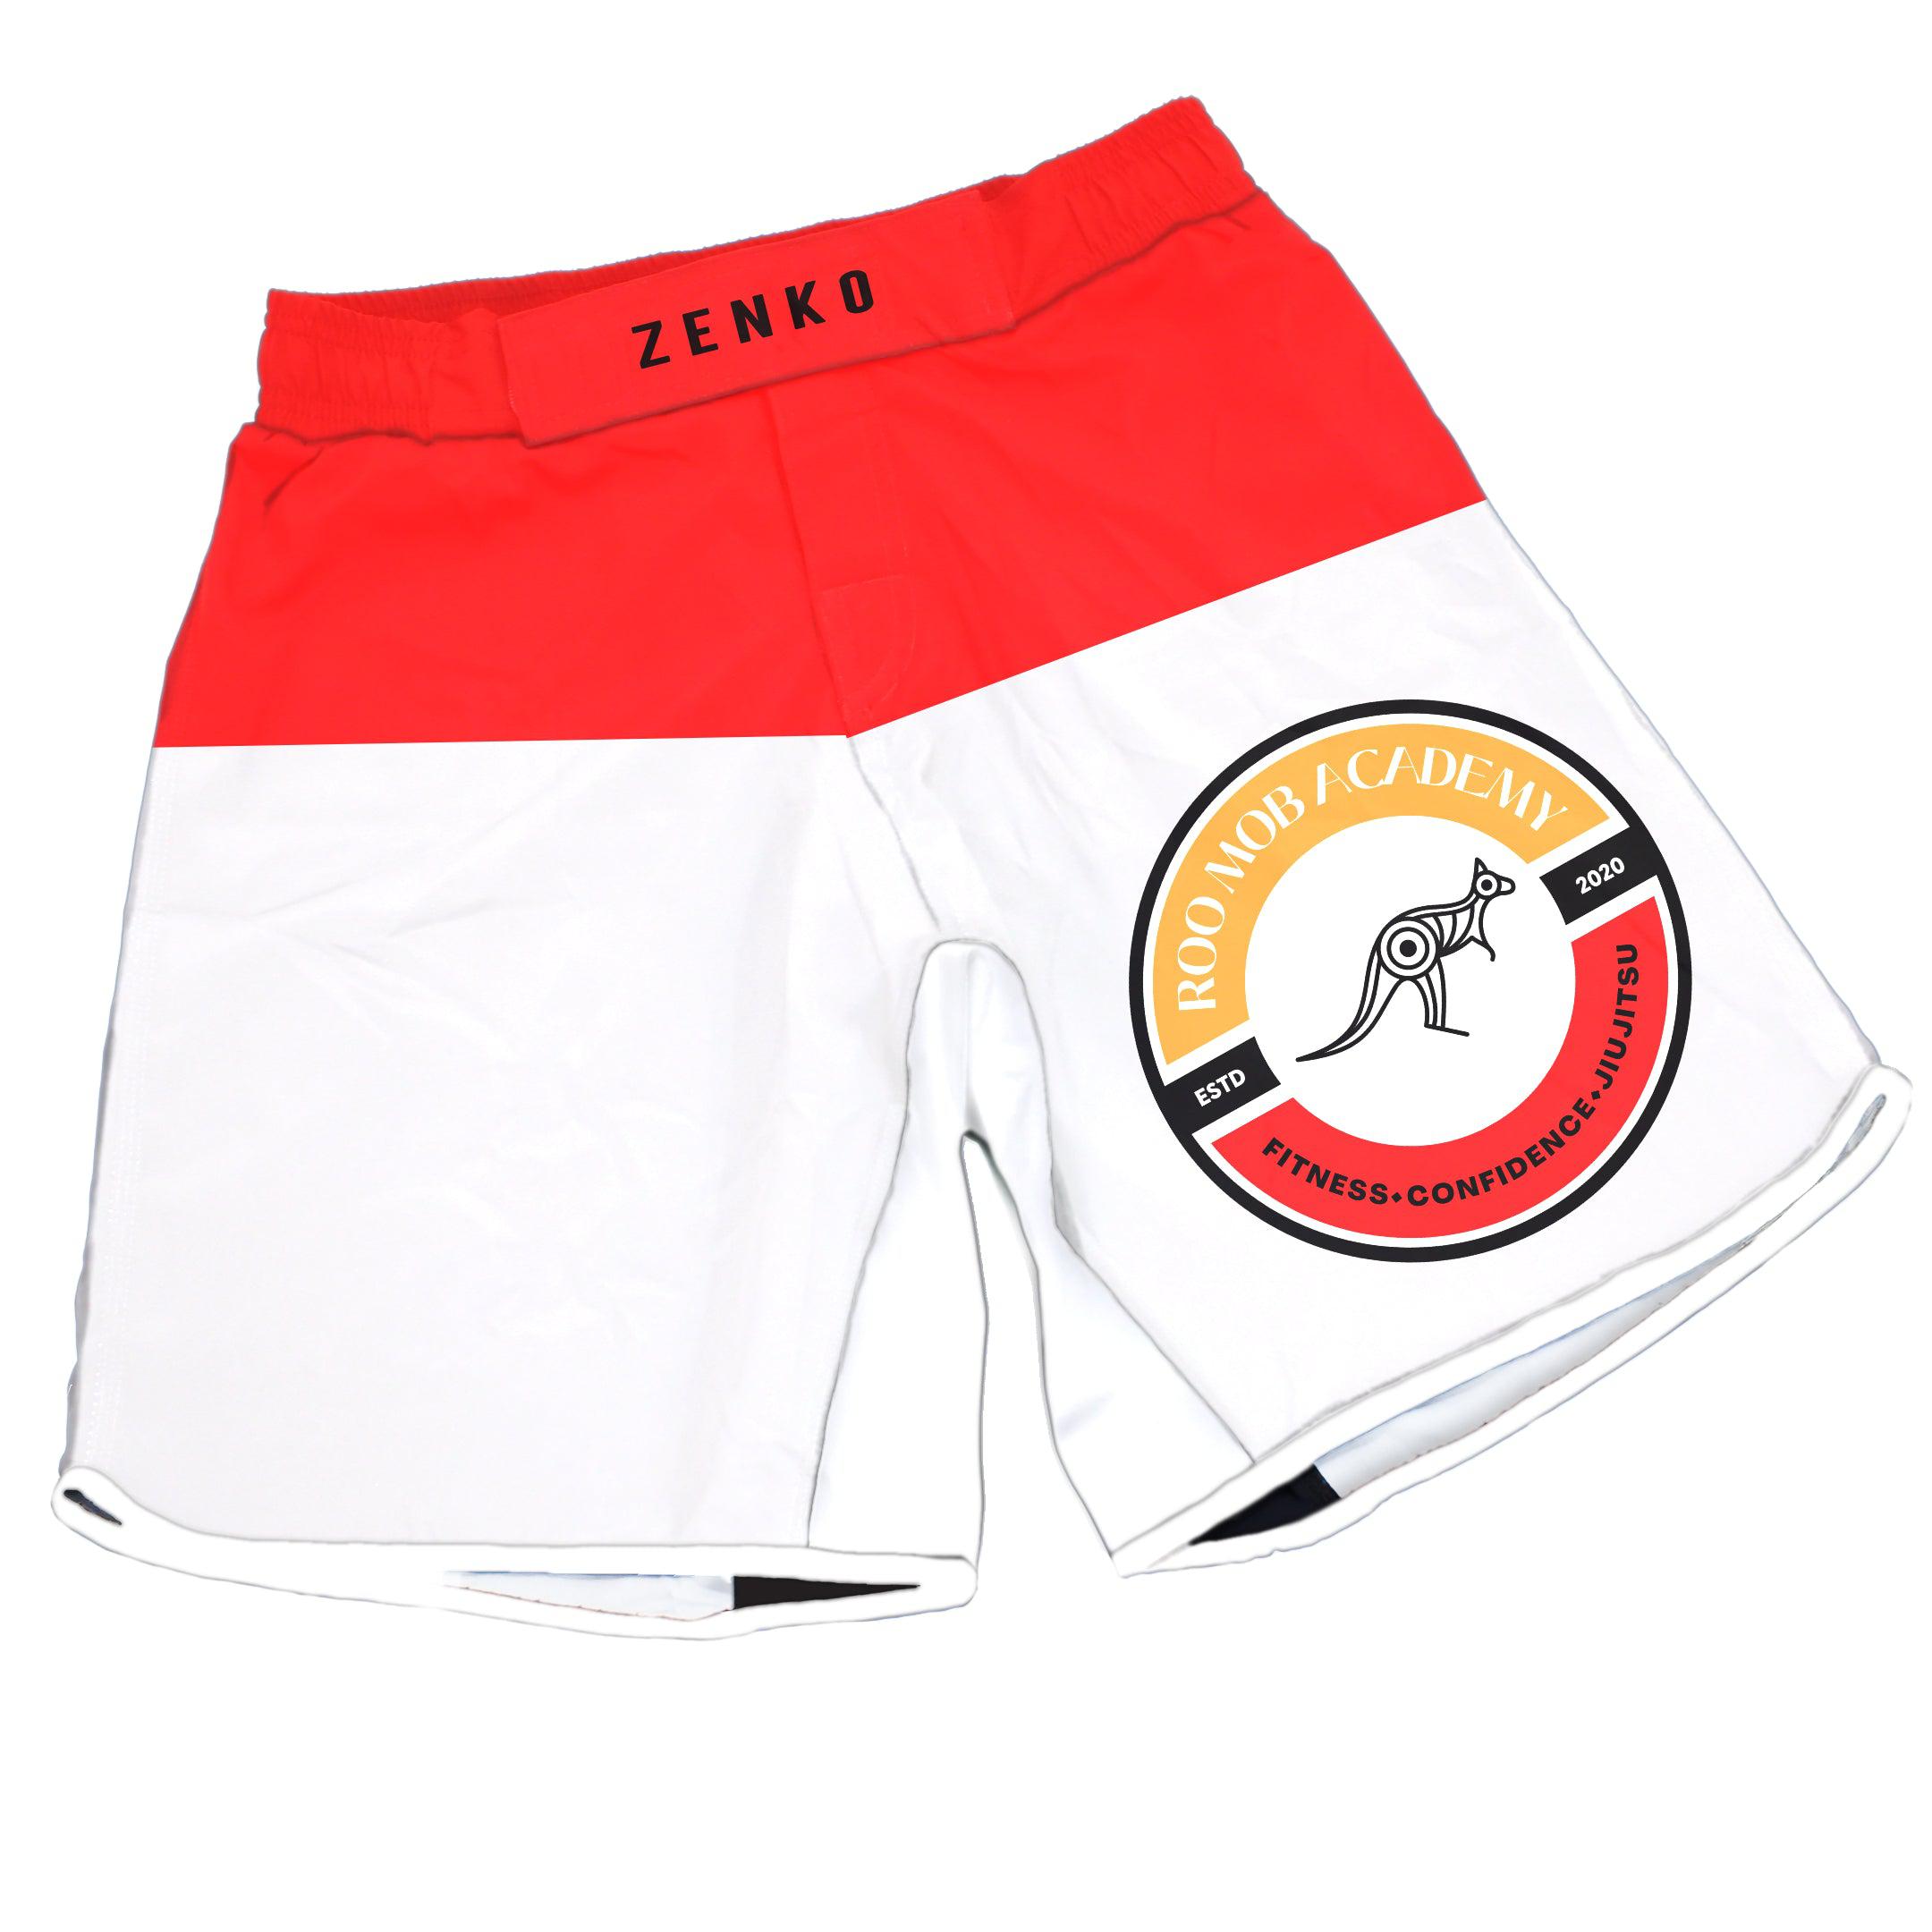 Roo Mob Academy Grappling Shorts - Zenko Fightwear